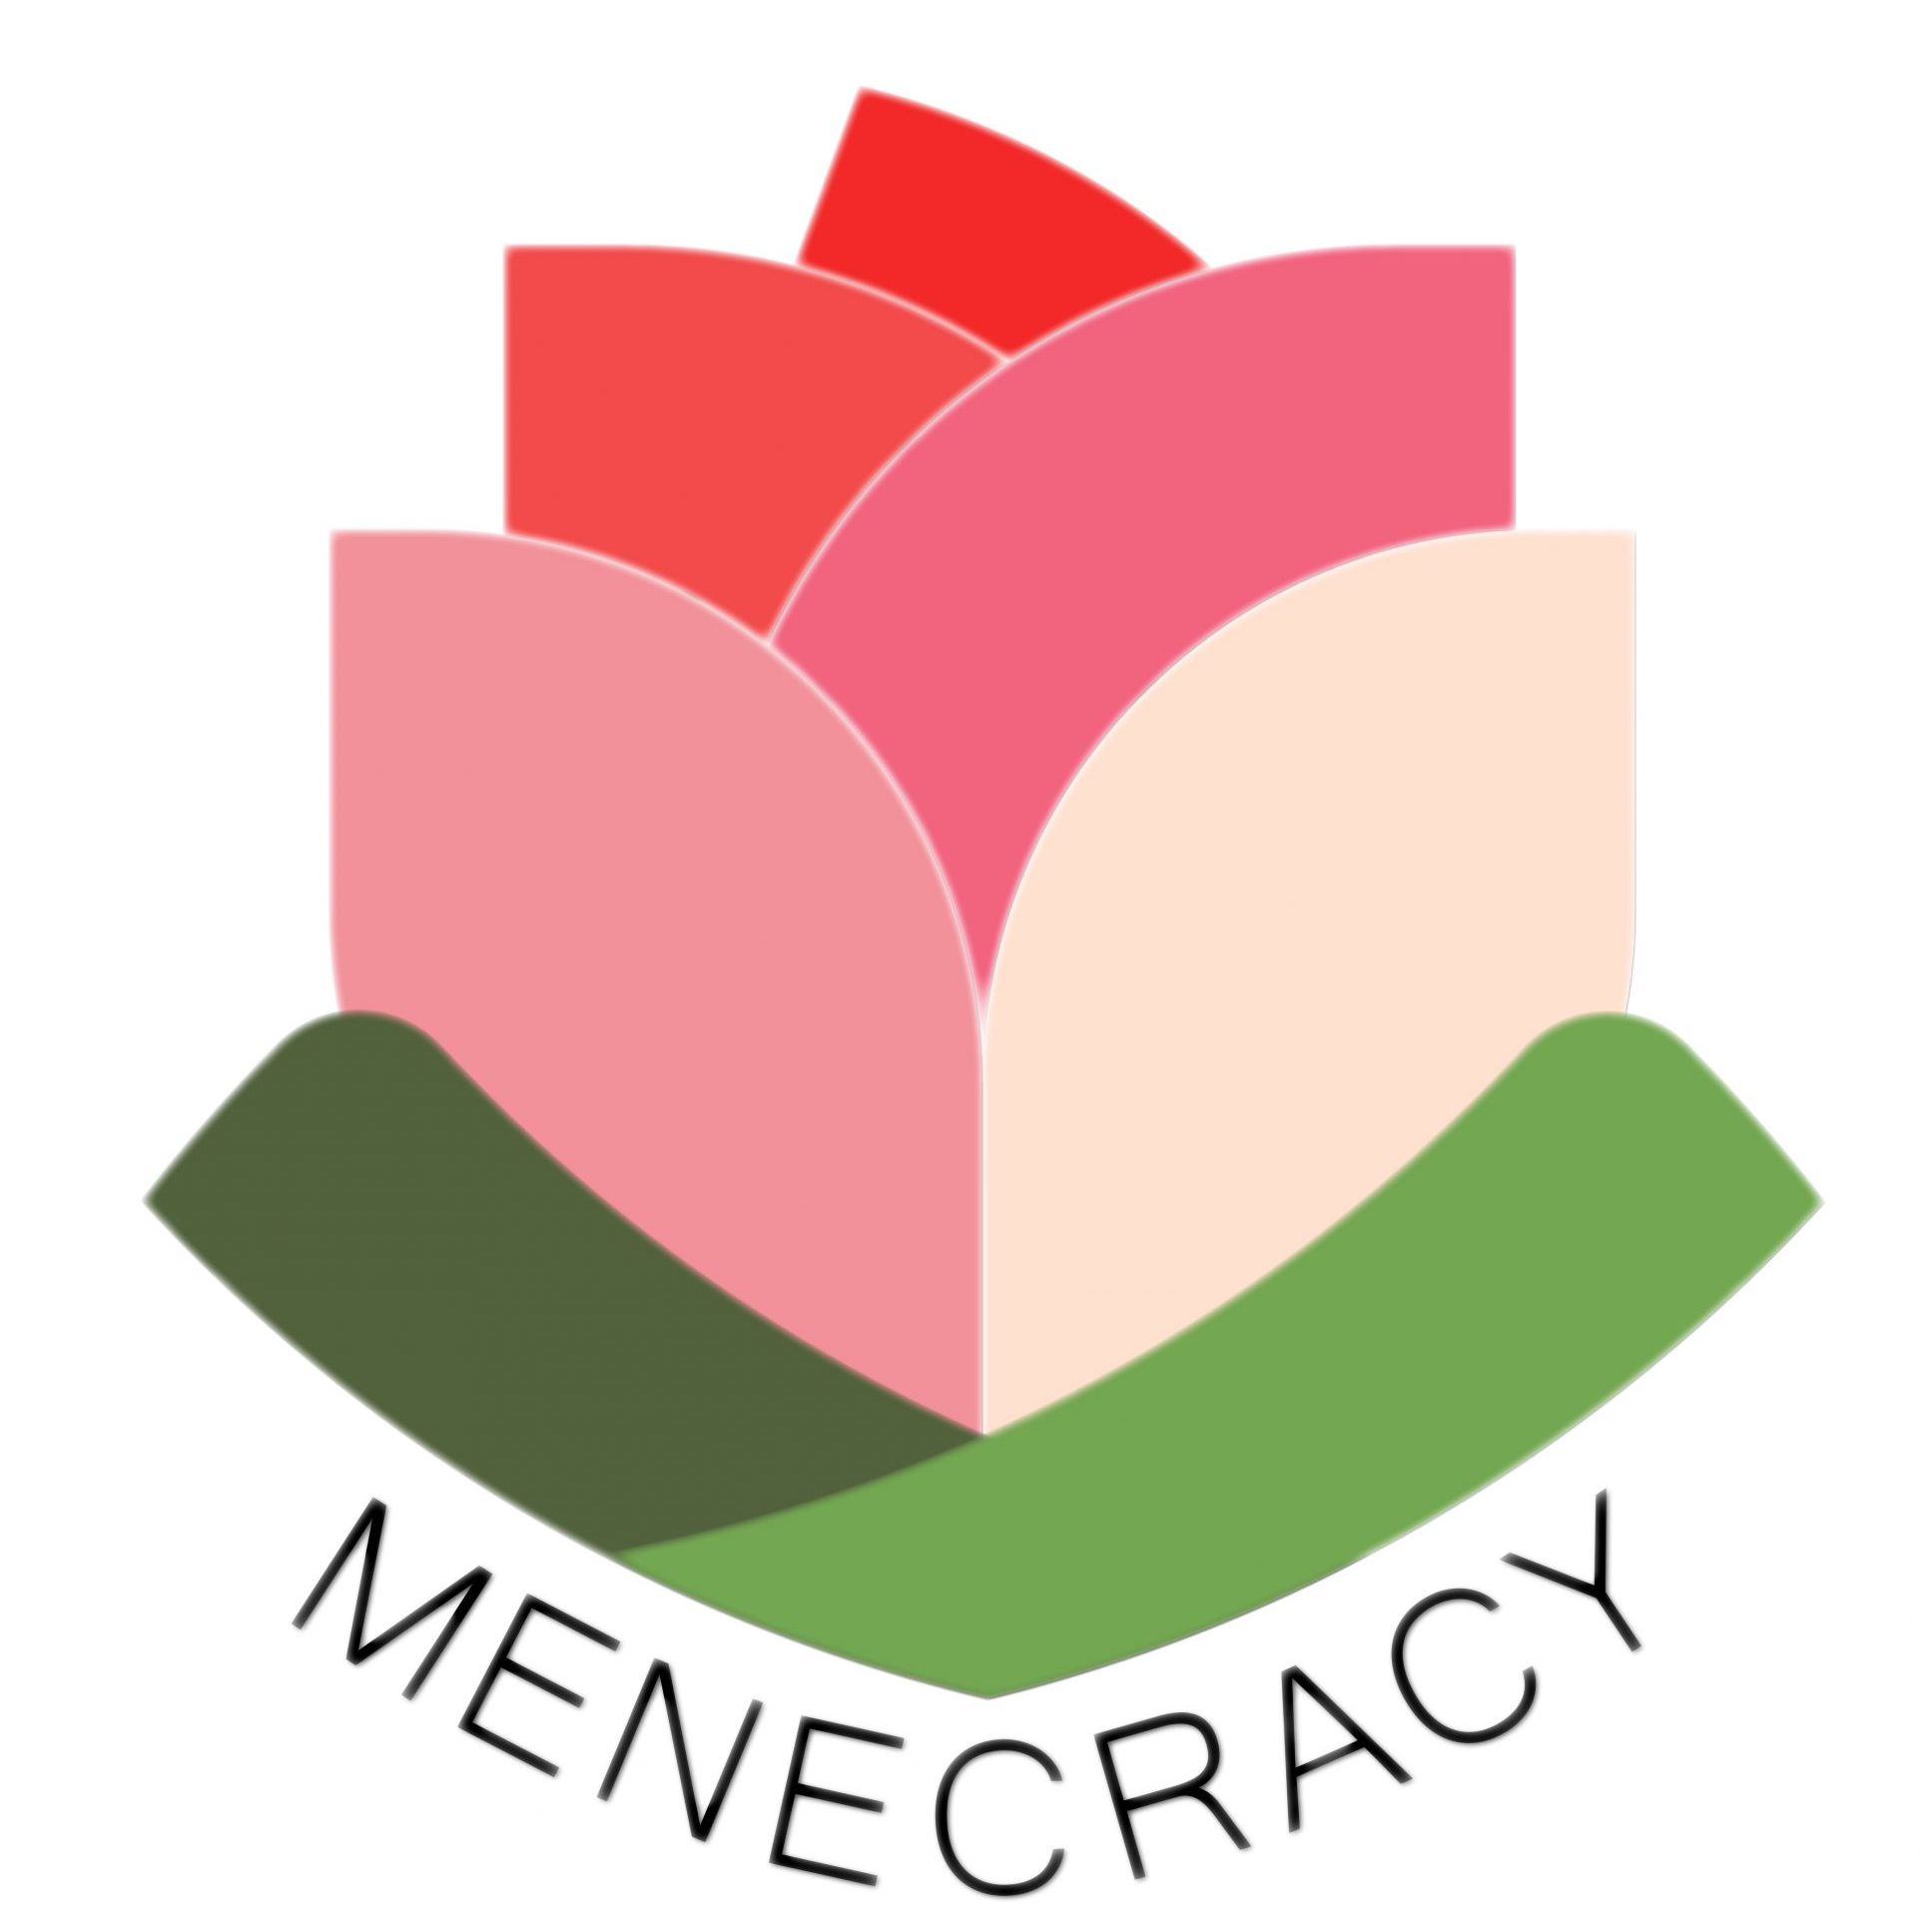 Menecracy Development Institute